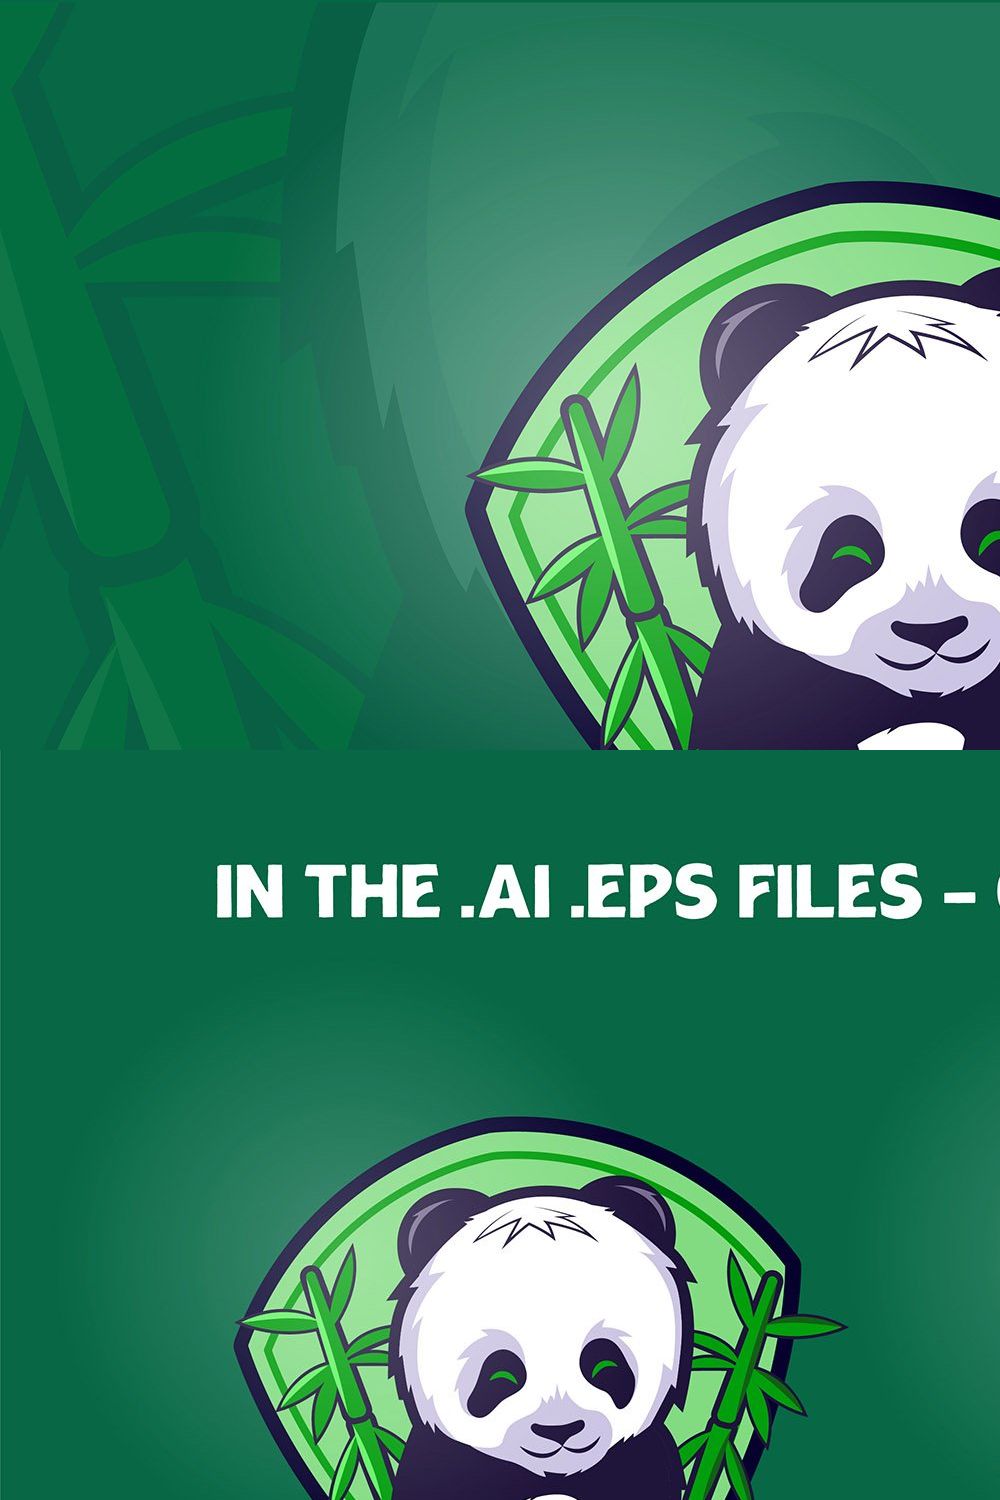 Little panda - mascot logo pinterest preview image.